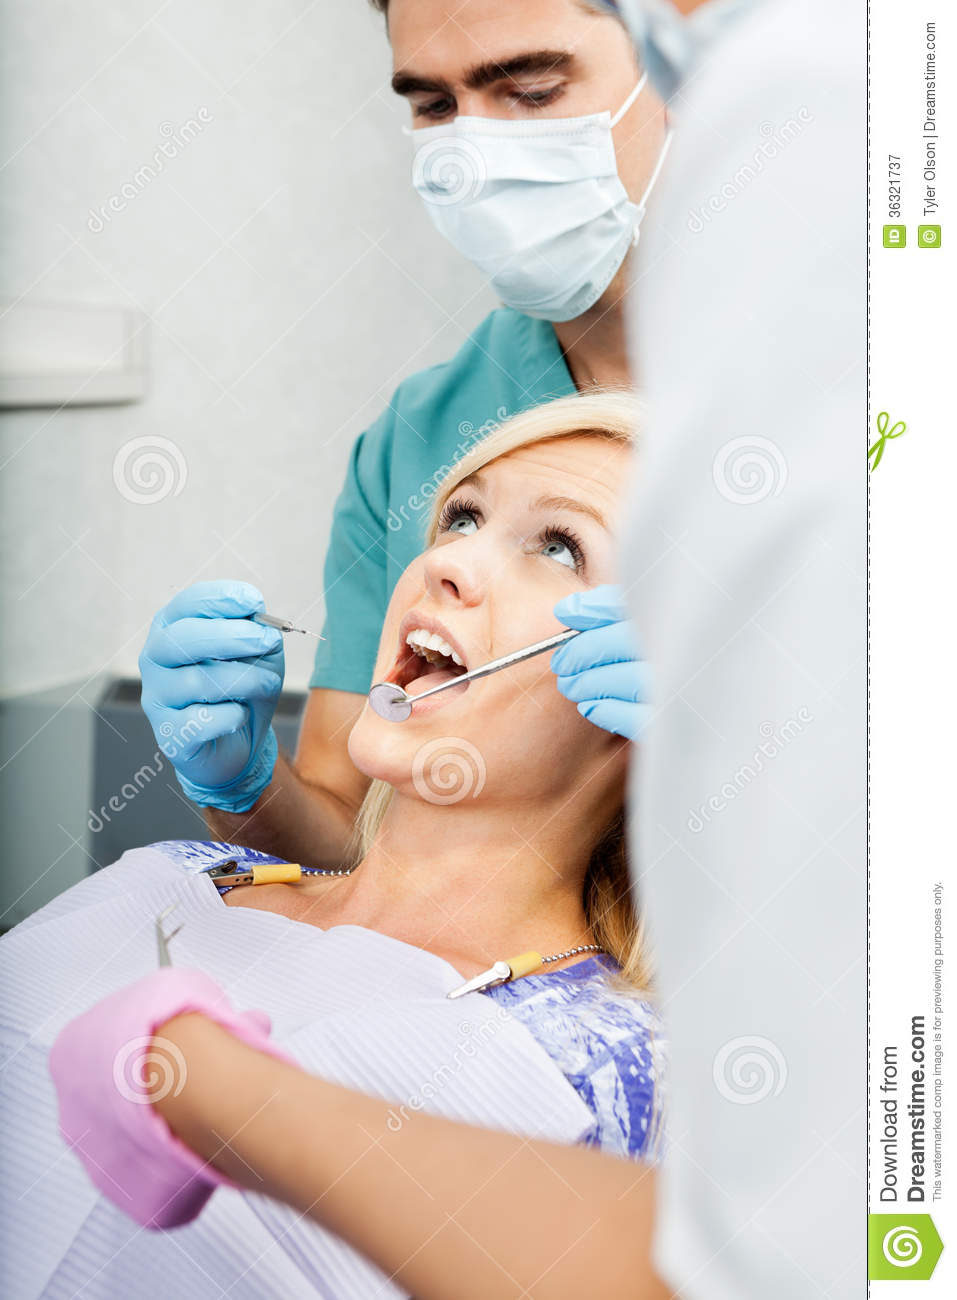 Dental Check Up Royalty Free Stock Photography   Image  36321737